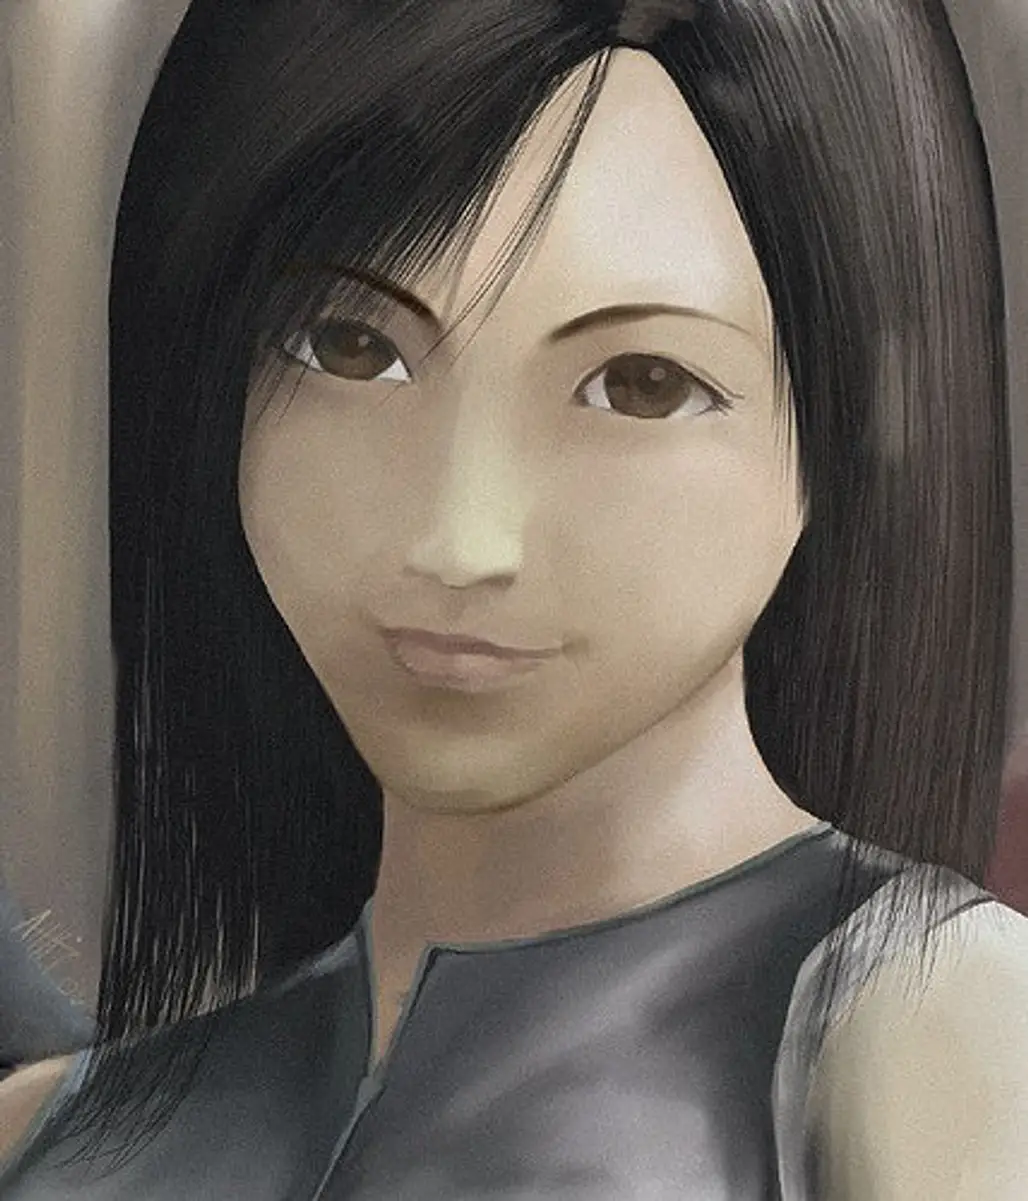 Tifa Lockhart from Final Fantasy VII